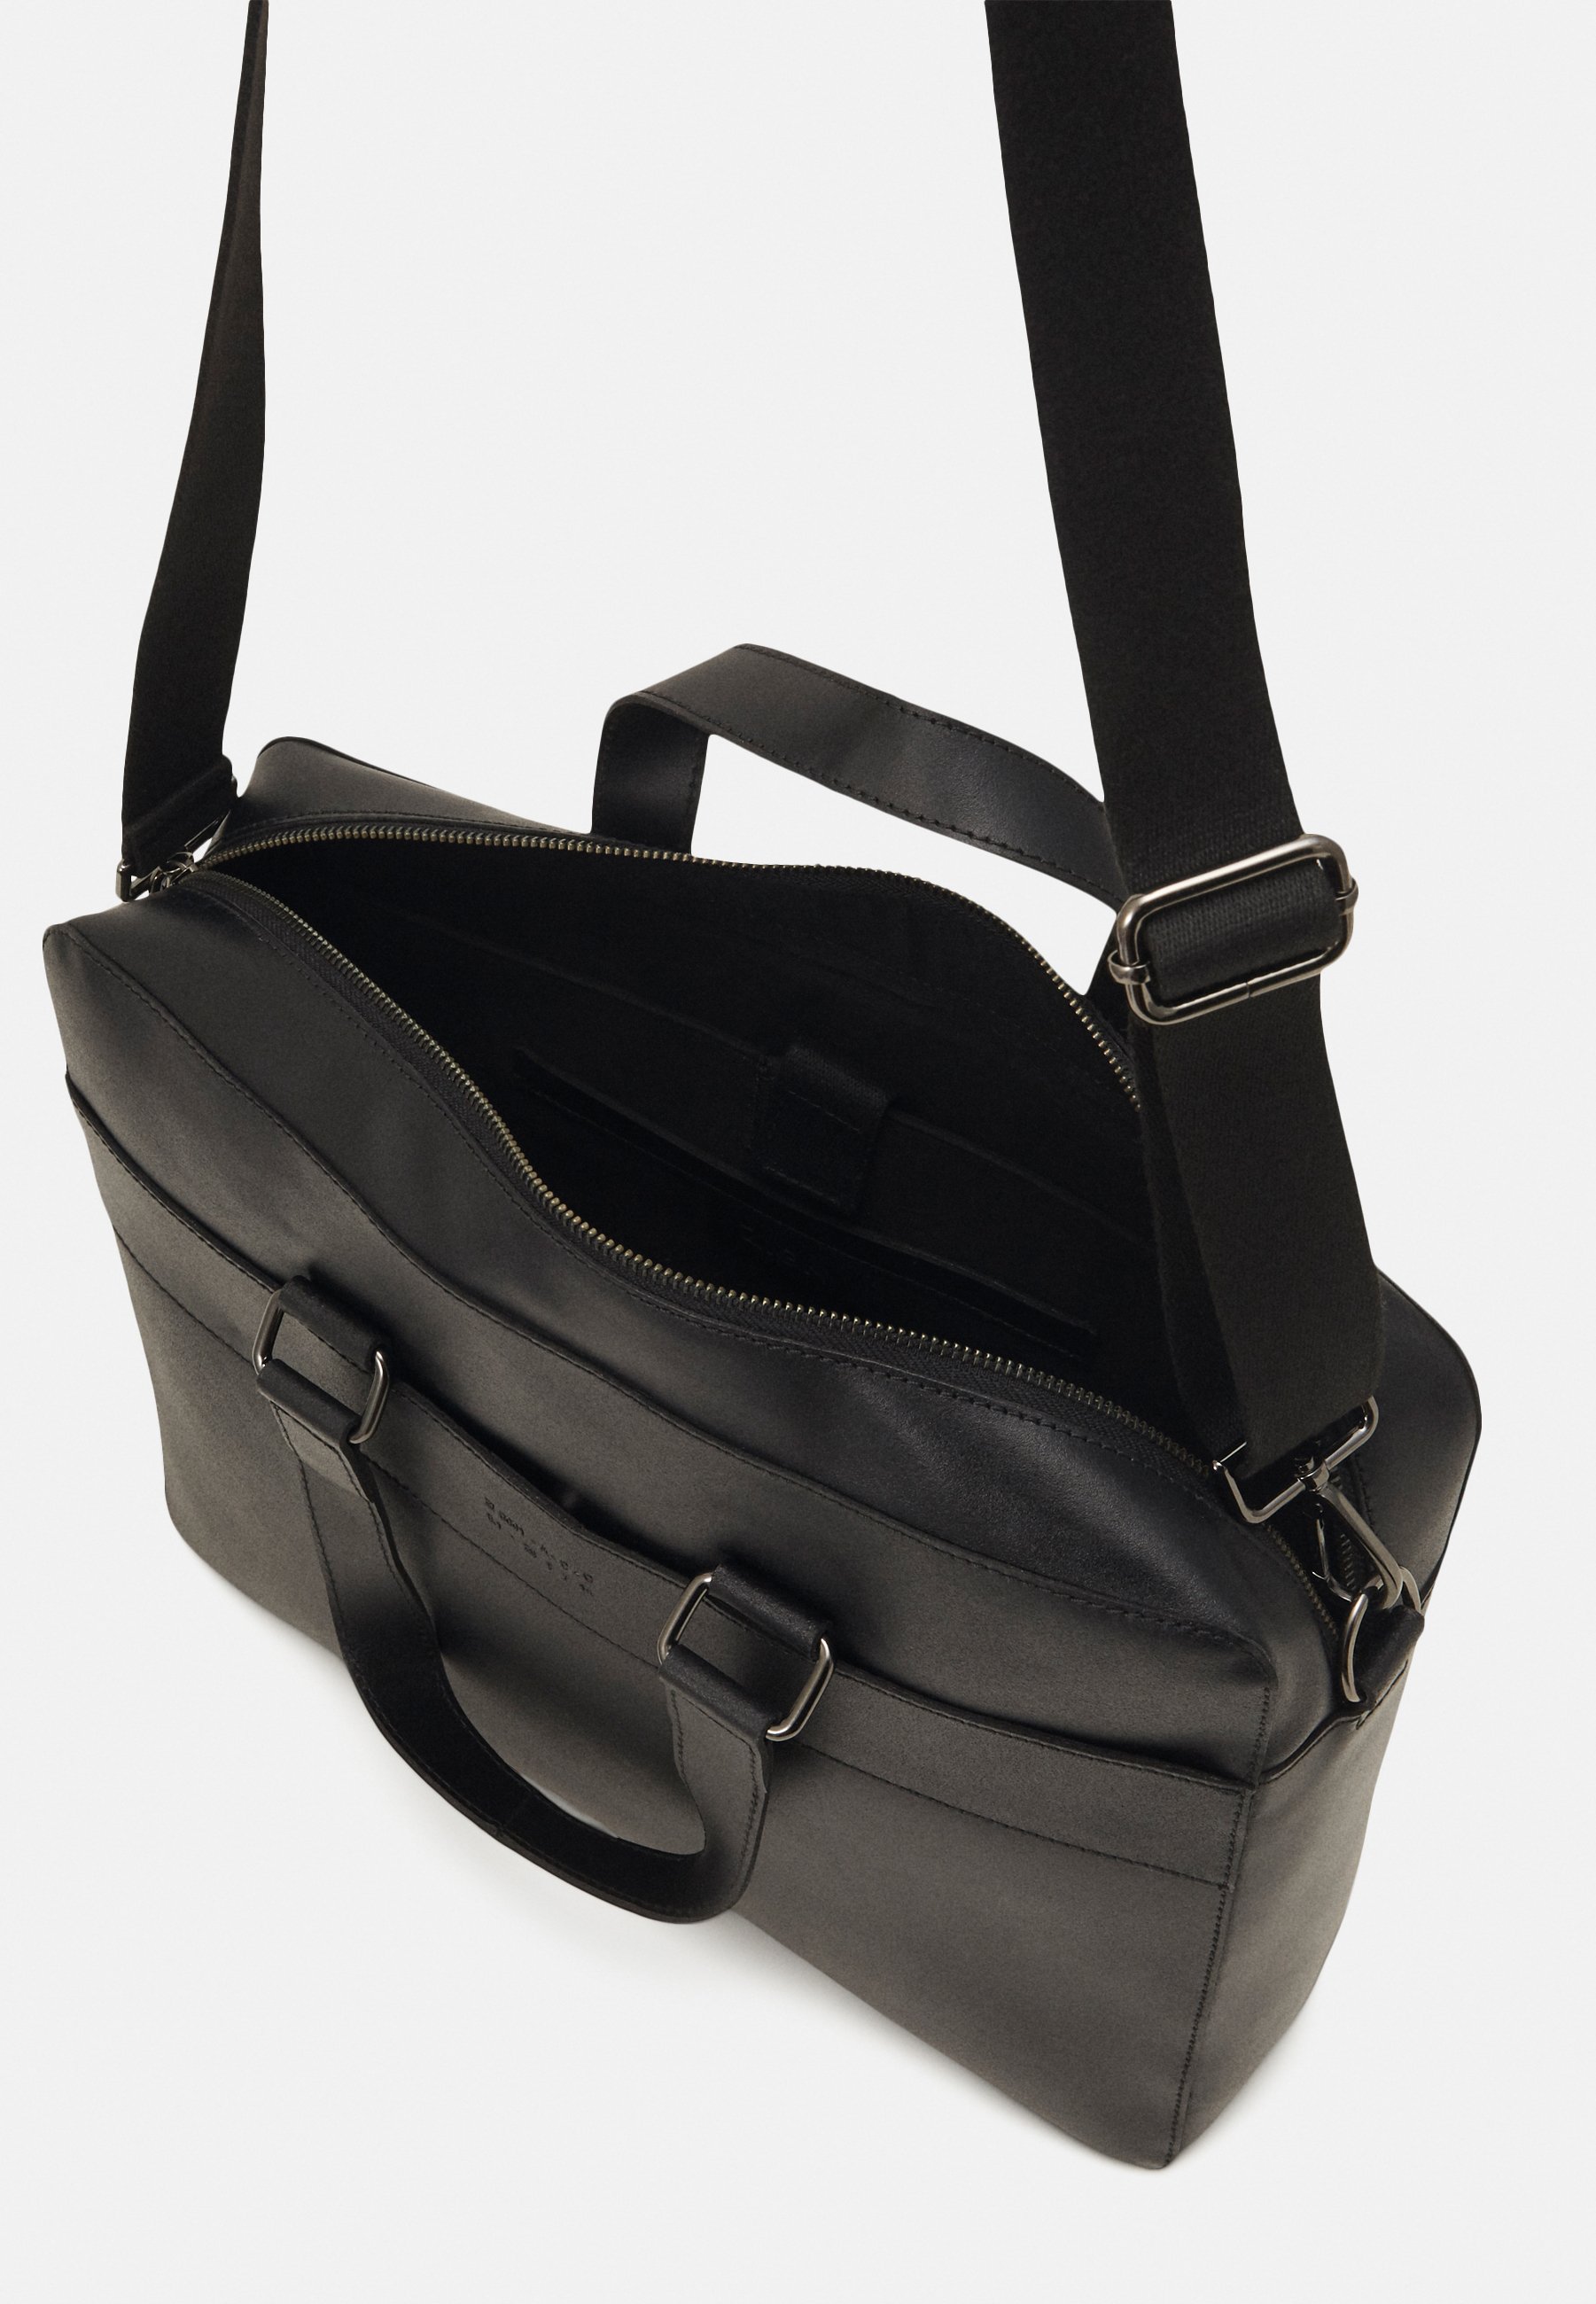 Zign Leather Laptopbag, Bag, Black Leatherbag